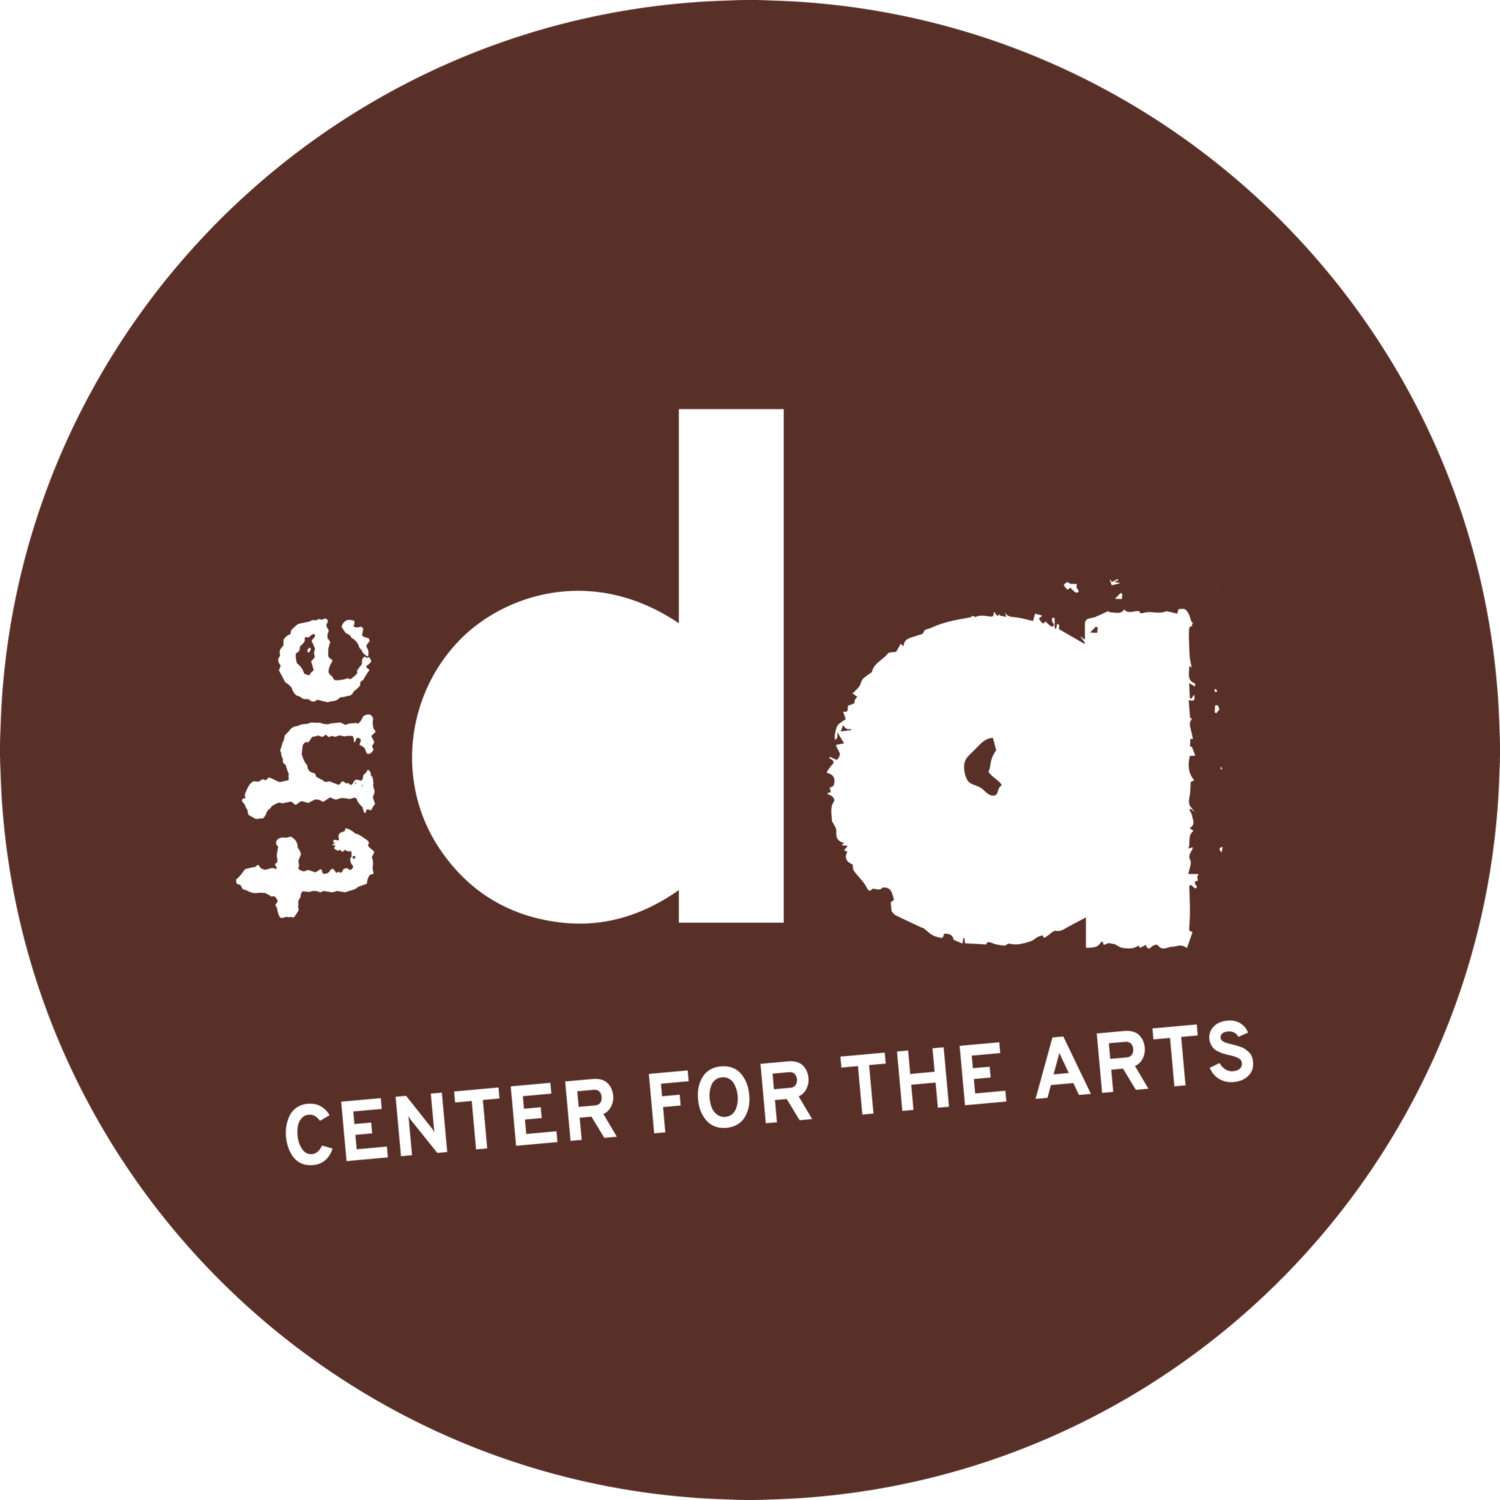 The dA Center for the Arts